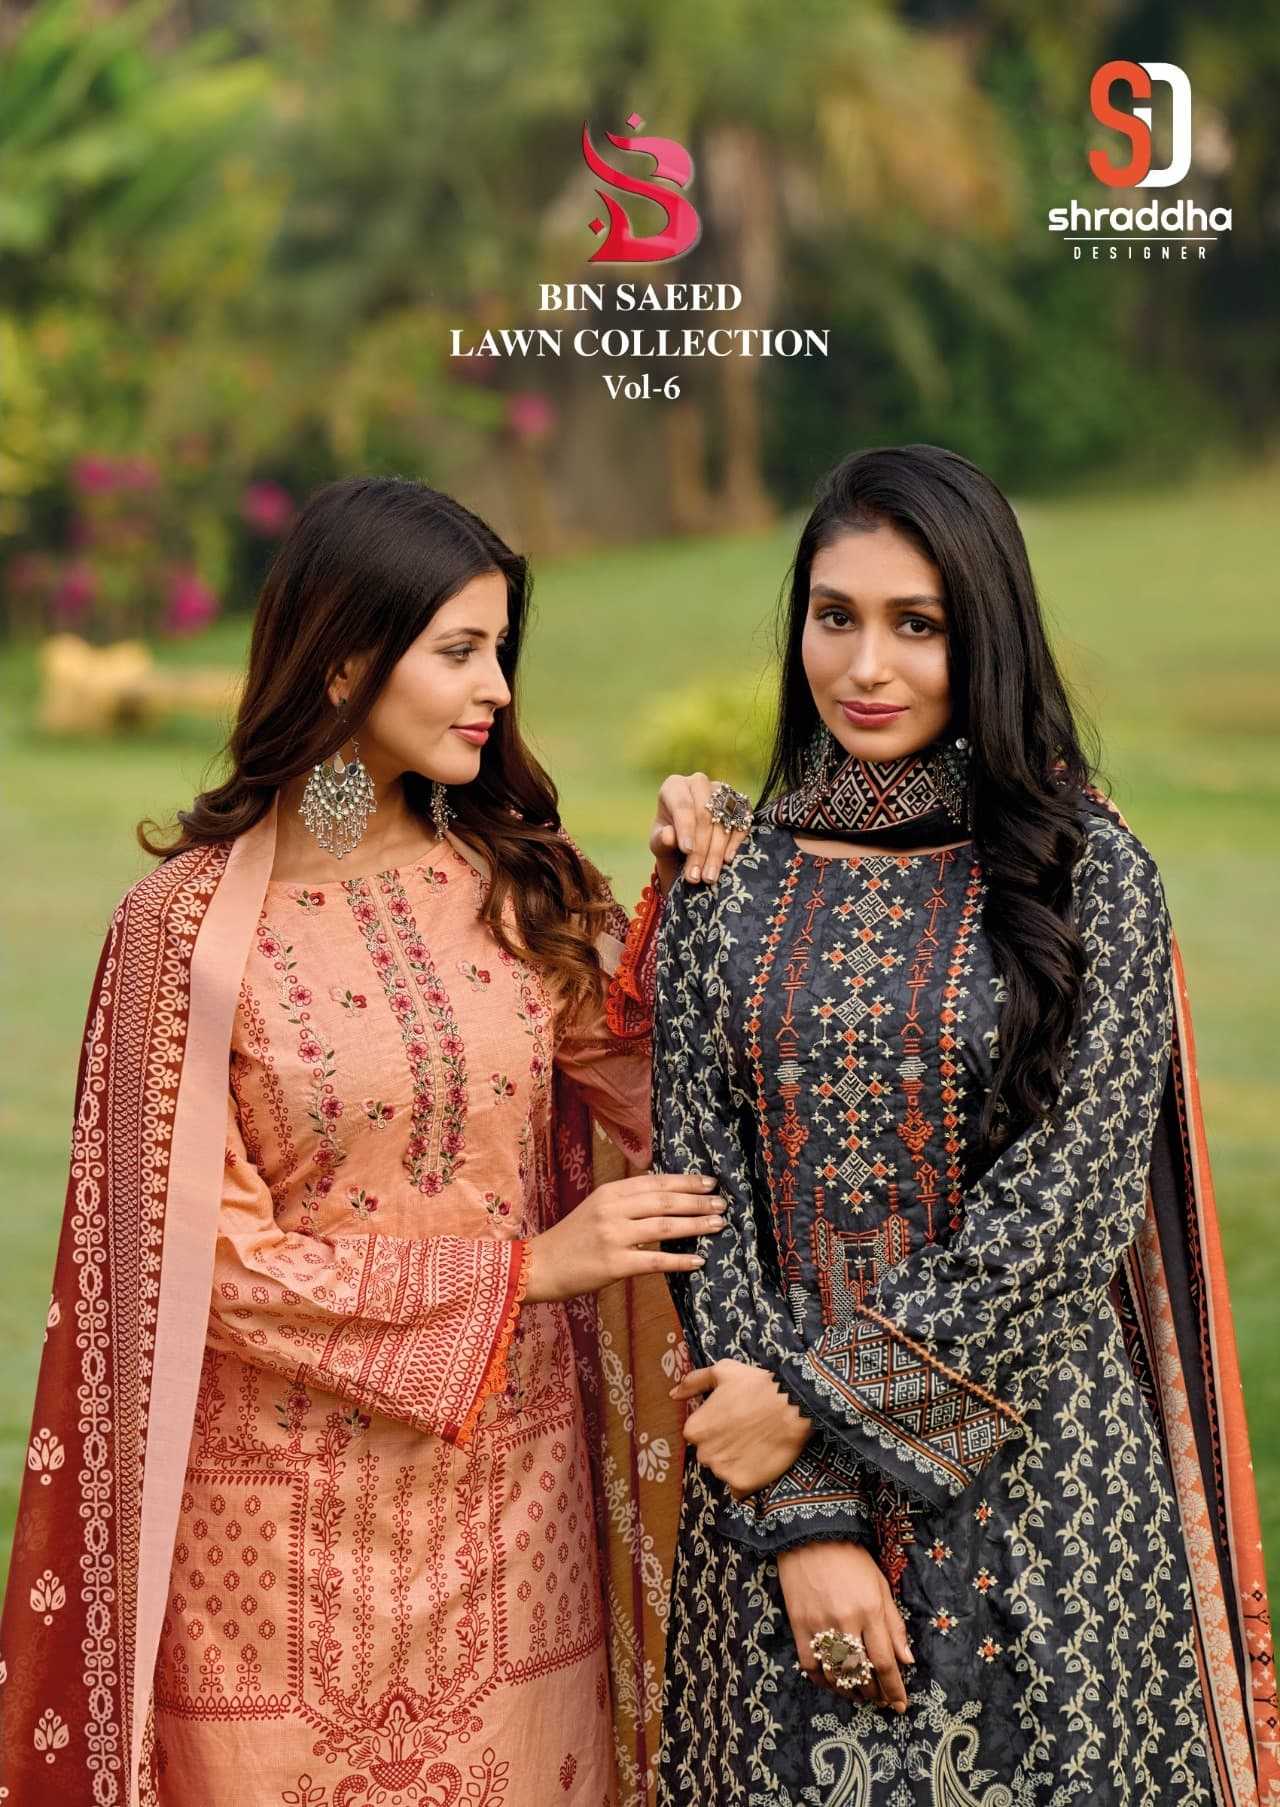 bin saeed vol 6 by shraddha designer pakistani cotton suits supplier